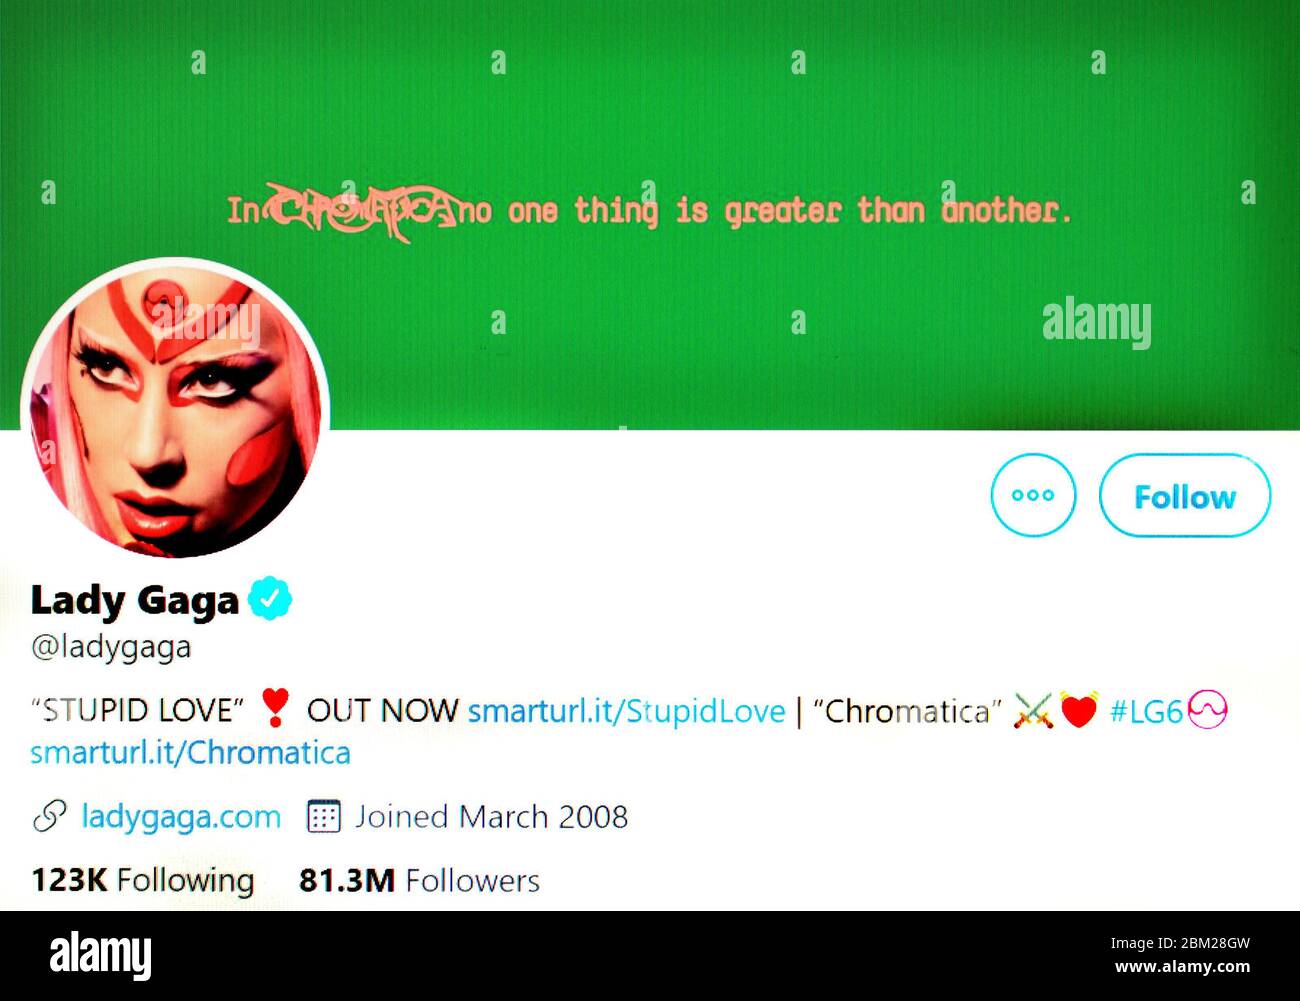 Page Twitter (mai 2020) : Lady Gaga (Stefani Joanne Angelina Germanotta) chanteuse, compositrice et actrice américaine Banque D'Images